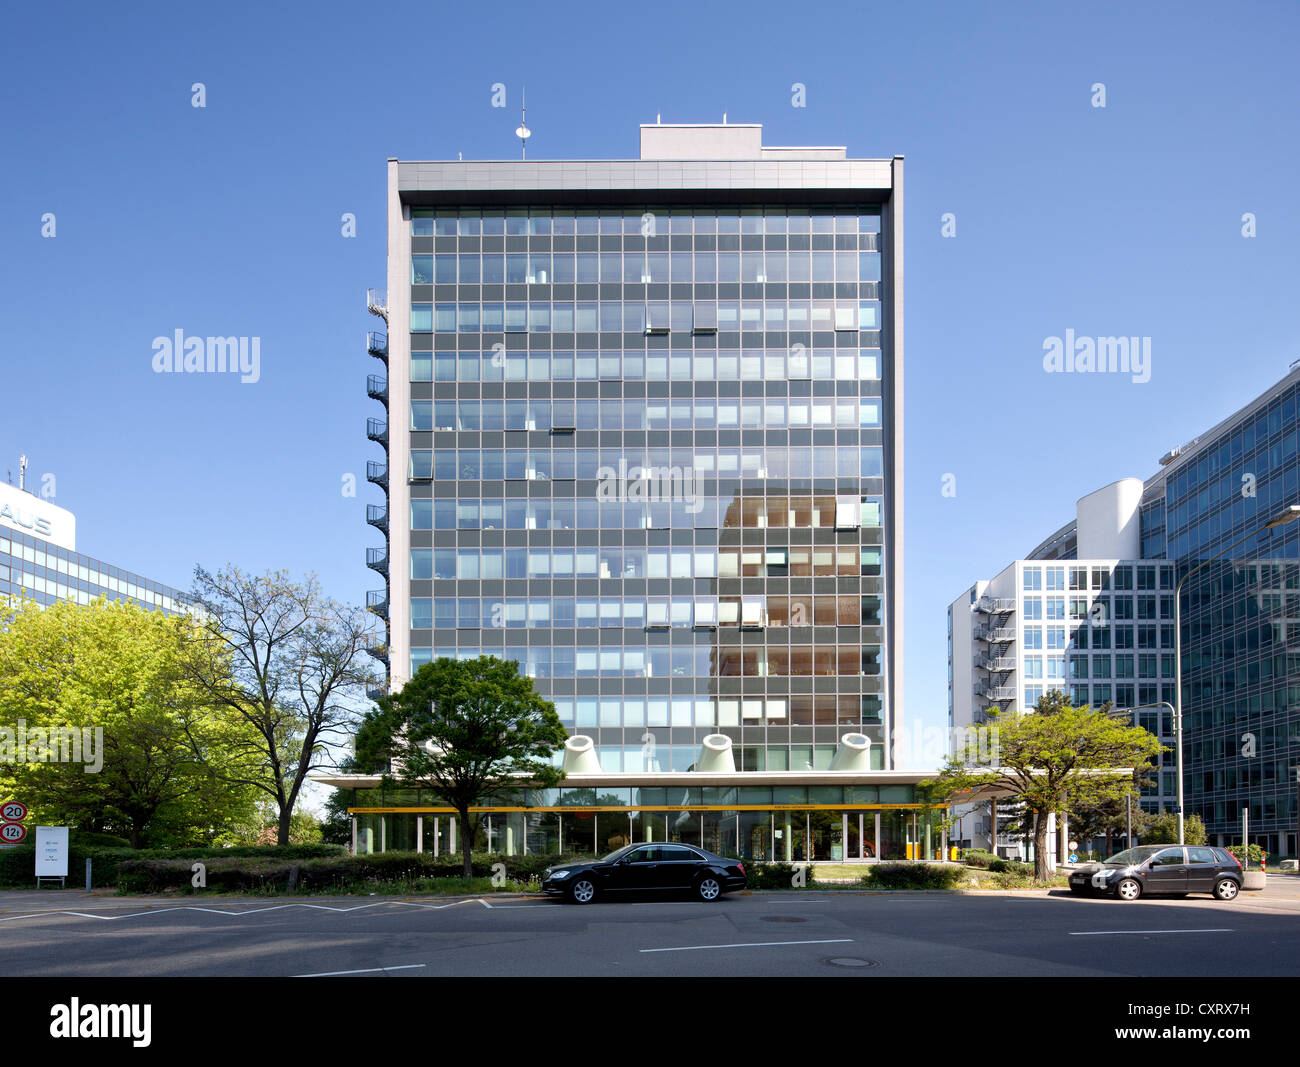 L'ADAC edificio per uffici, Buerostadt Niederrad business park, Frankfurt am Main, Hesse, PublicGround Foto Stock